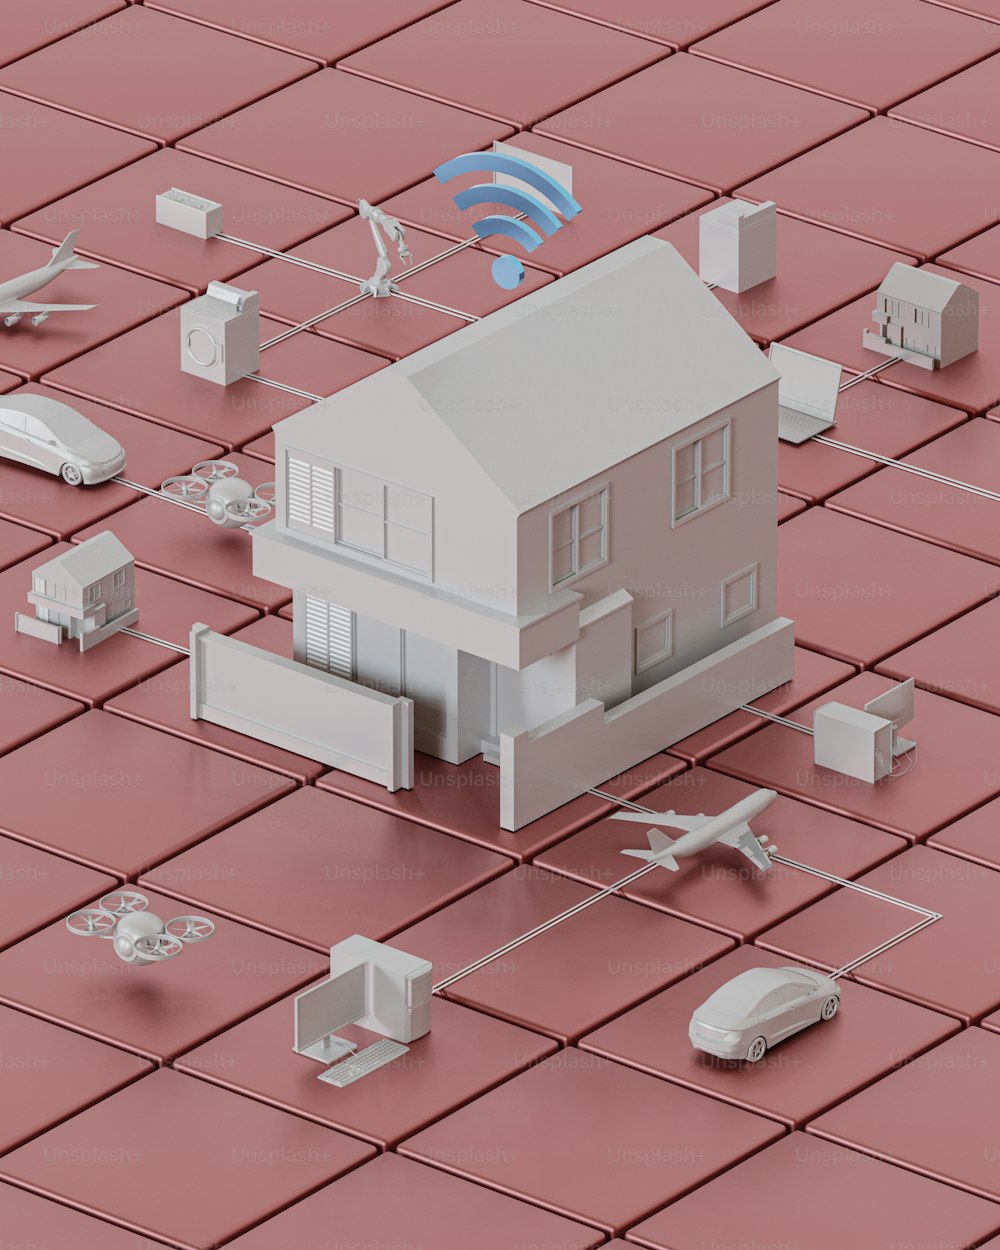 Un modelo de una casa rodeada de dispositivos conectados